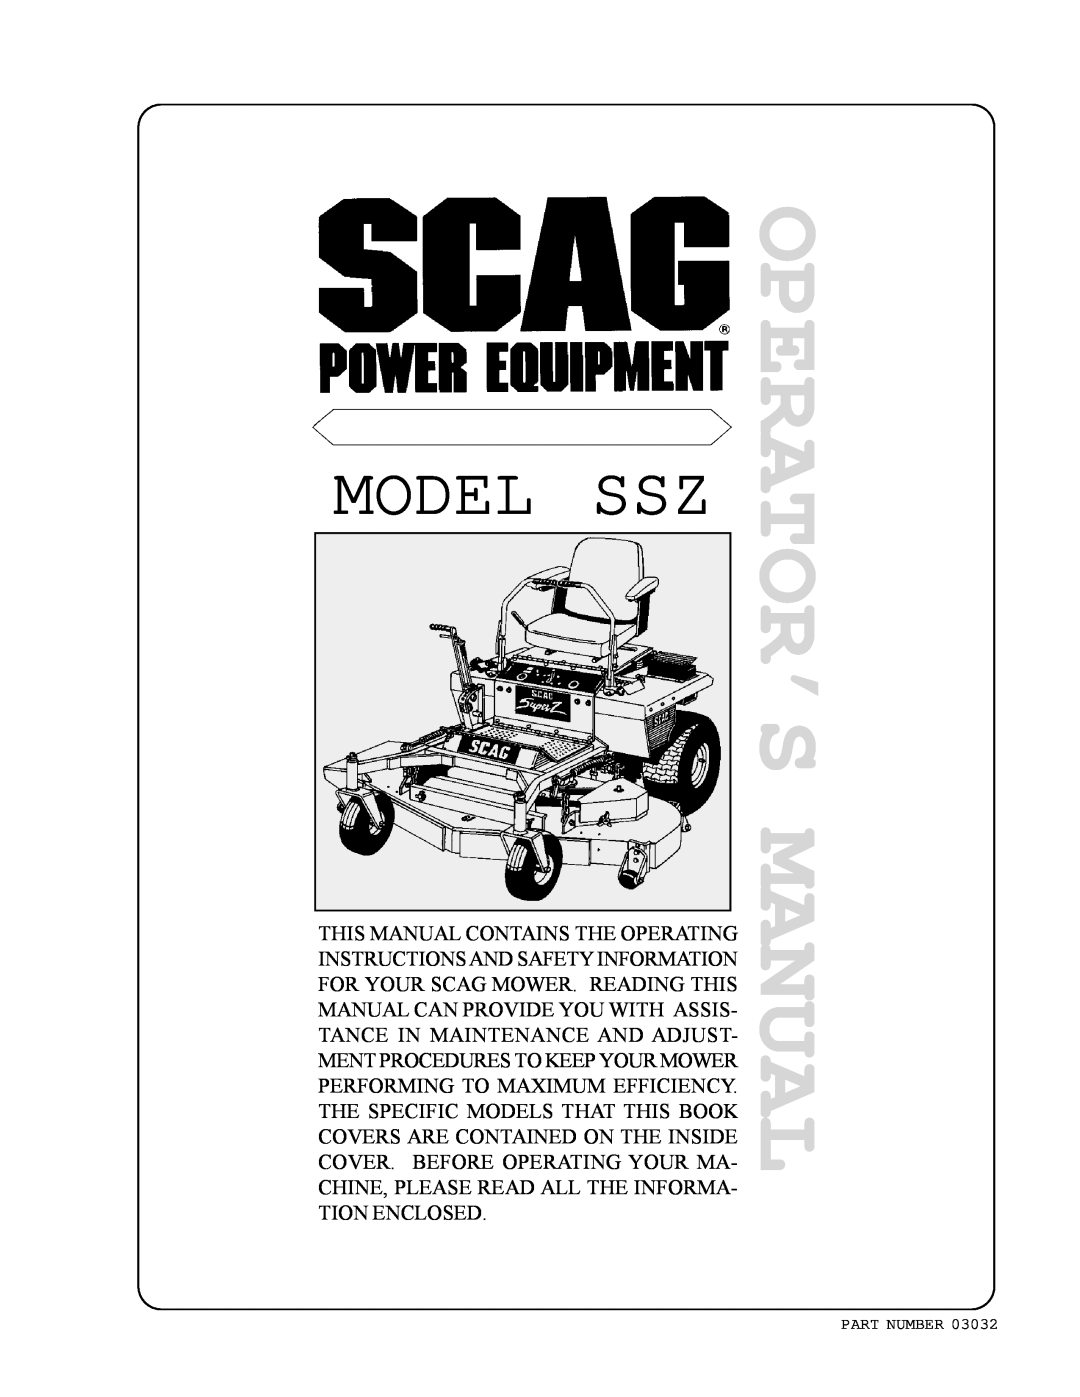 Scag Power Equipment SSZ operating instructions Operator’S Manual, Model Ssz 